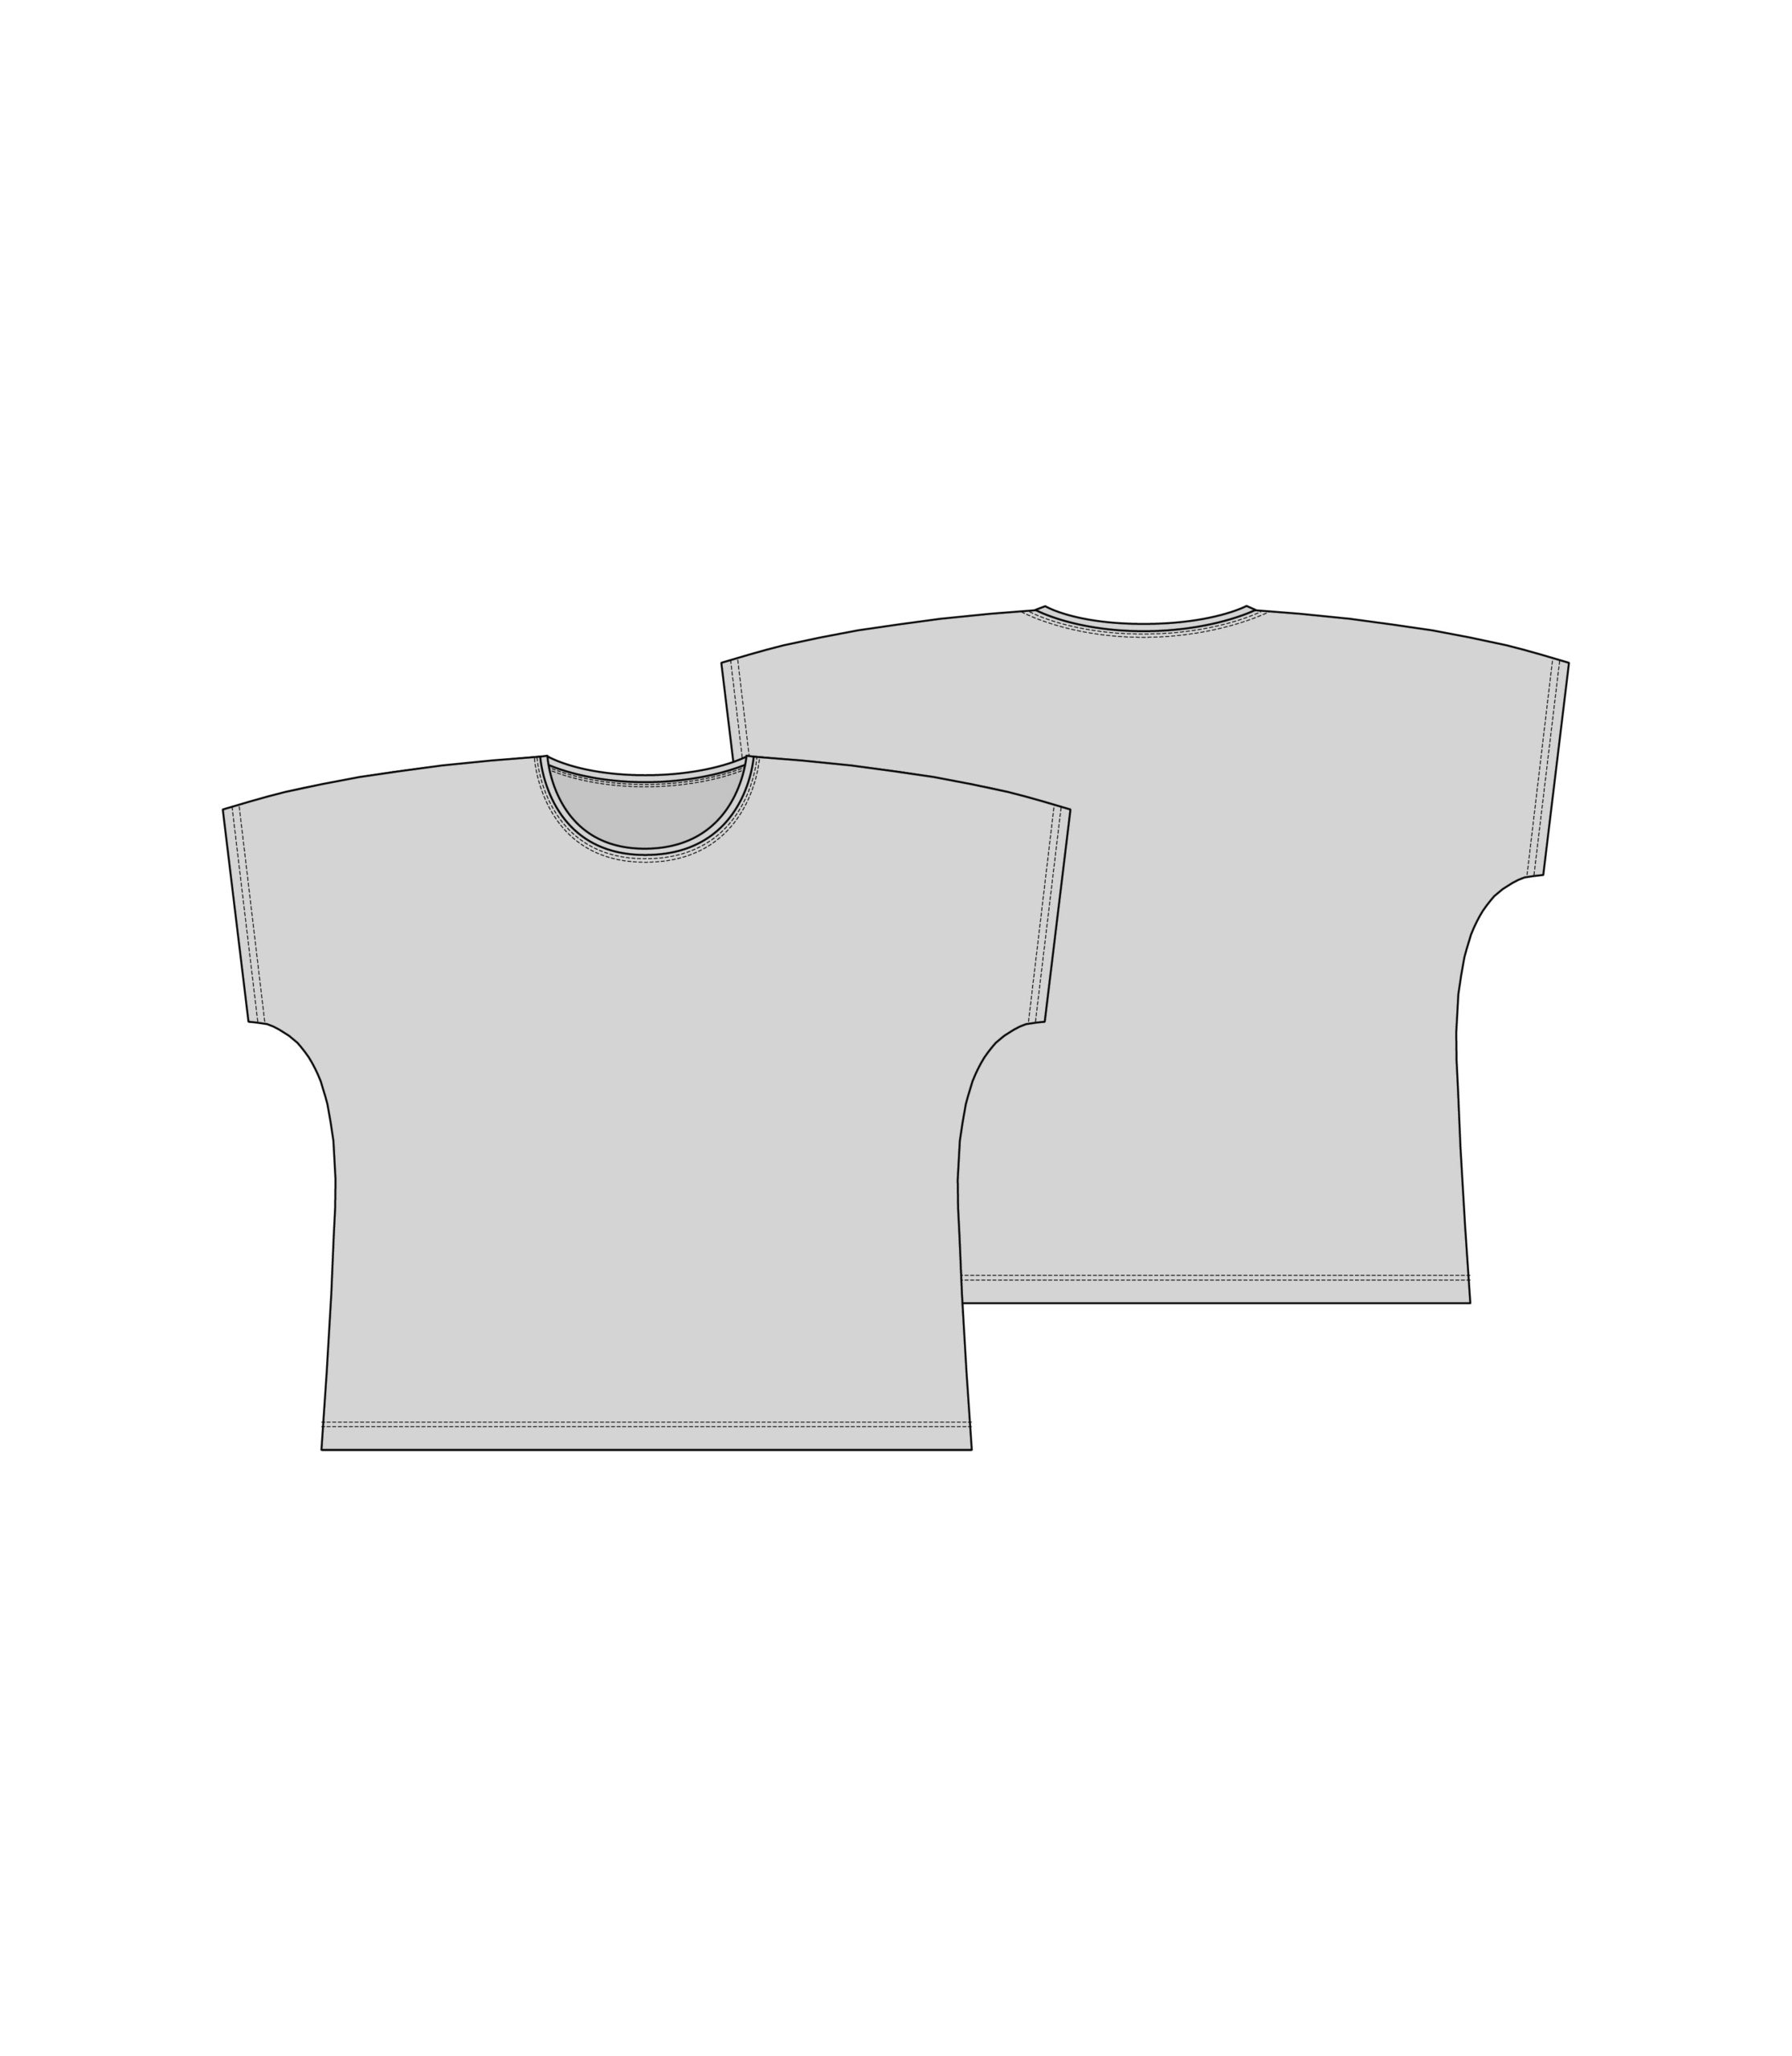 patron-camiseta-basica-japonesa-dibujo-plano